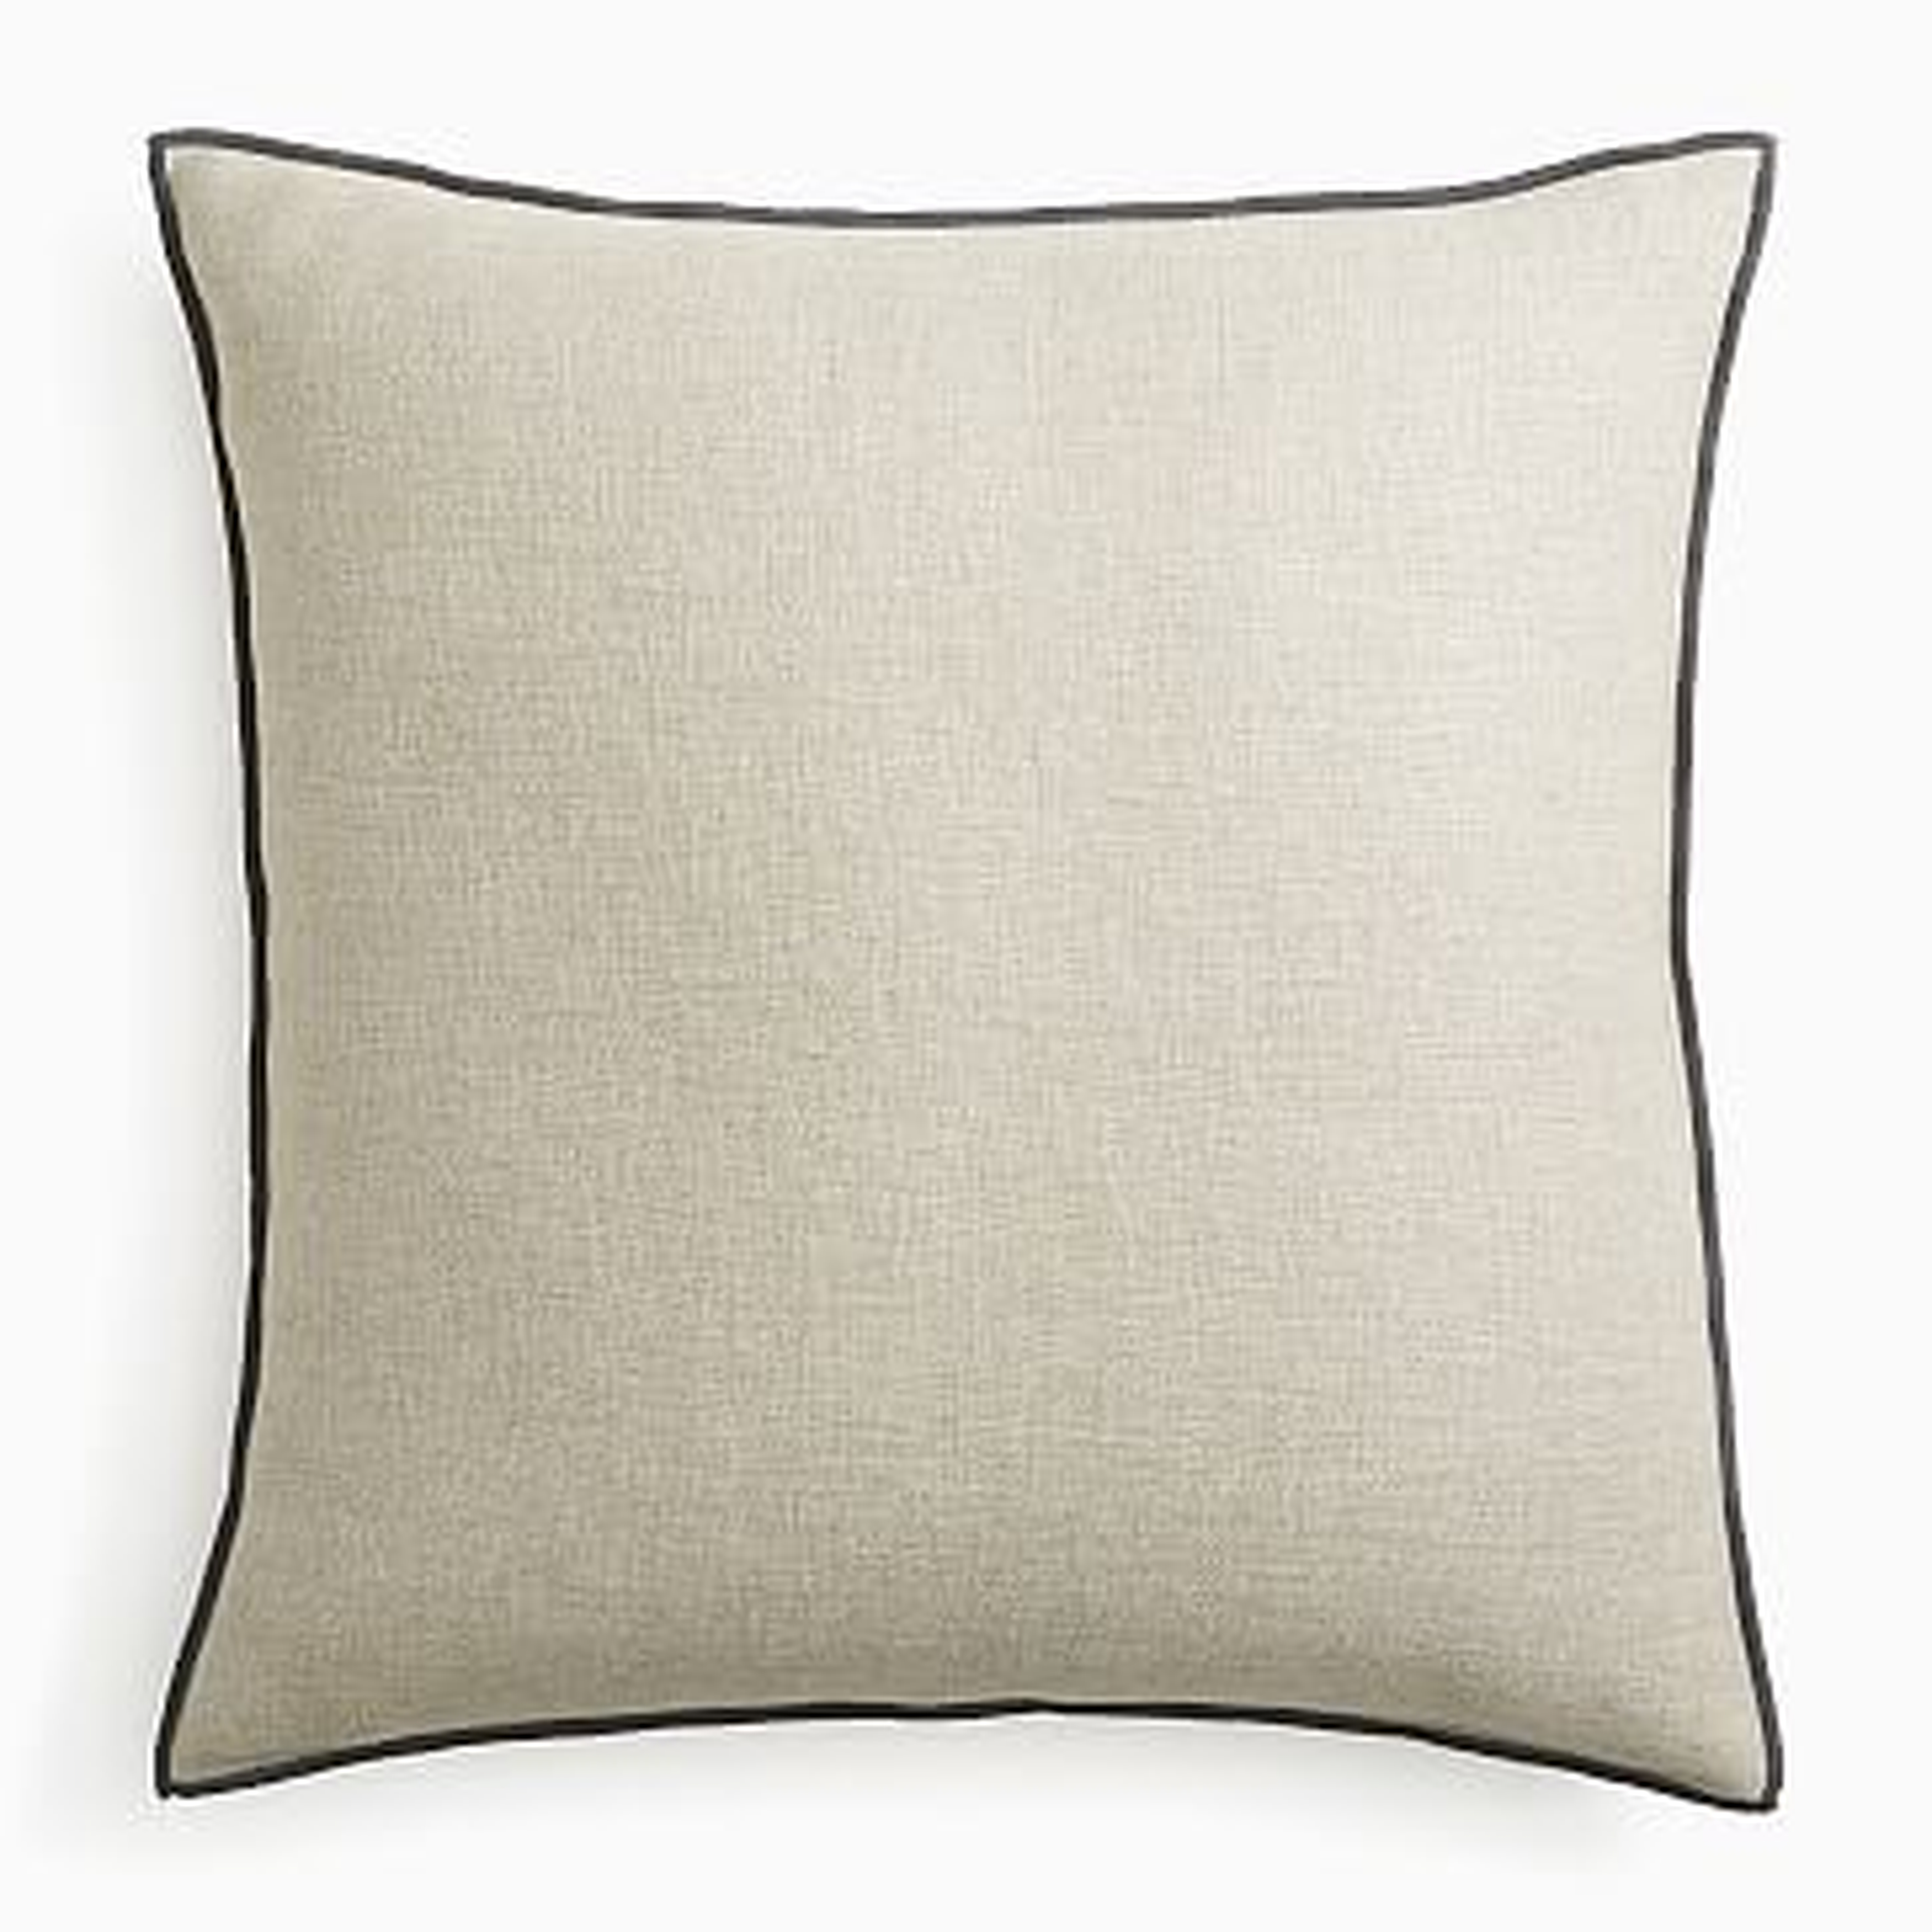 Classic Linen Pillow Cover, 24"x24", Natural, Set of 2 - West Elm